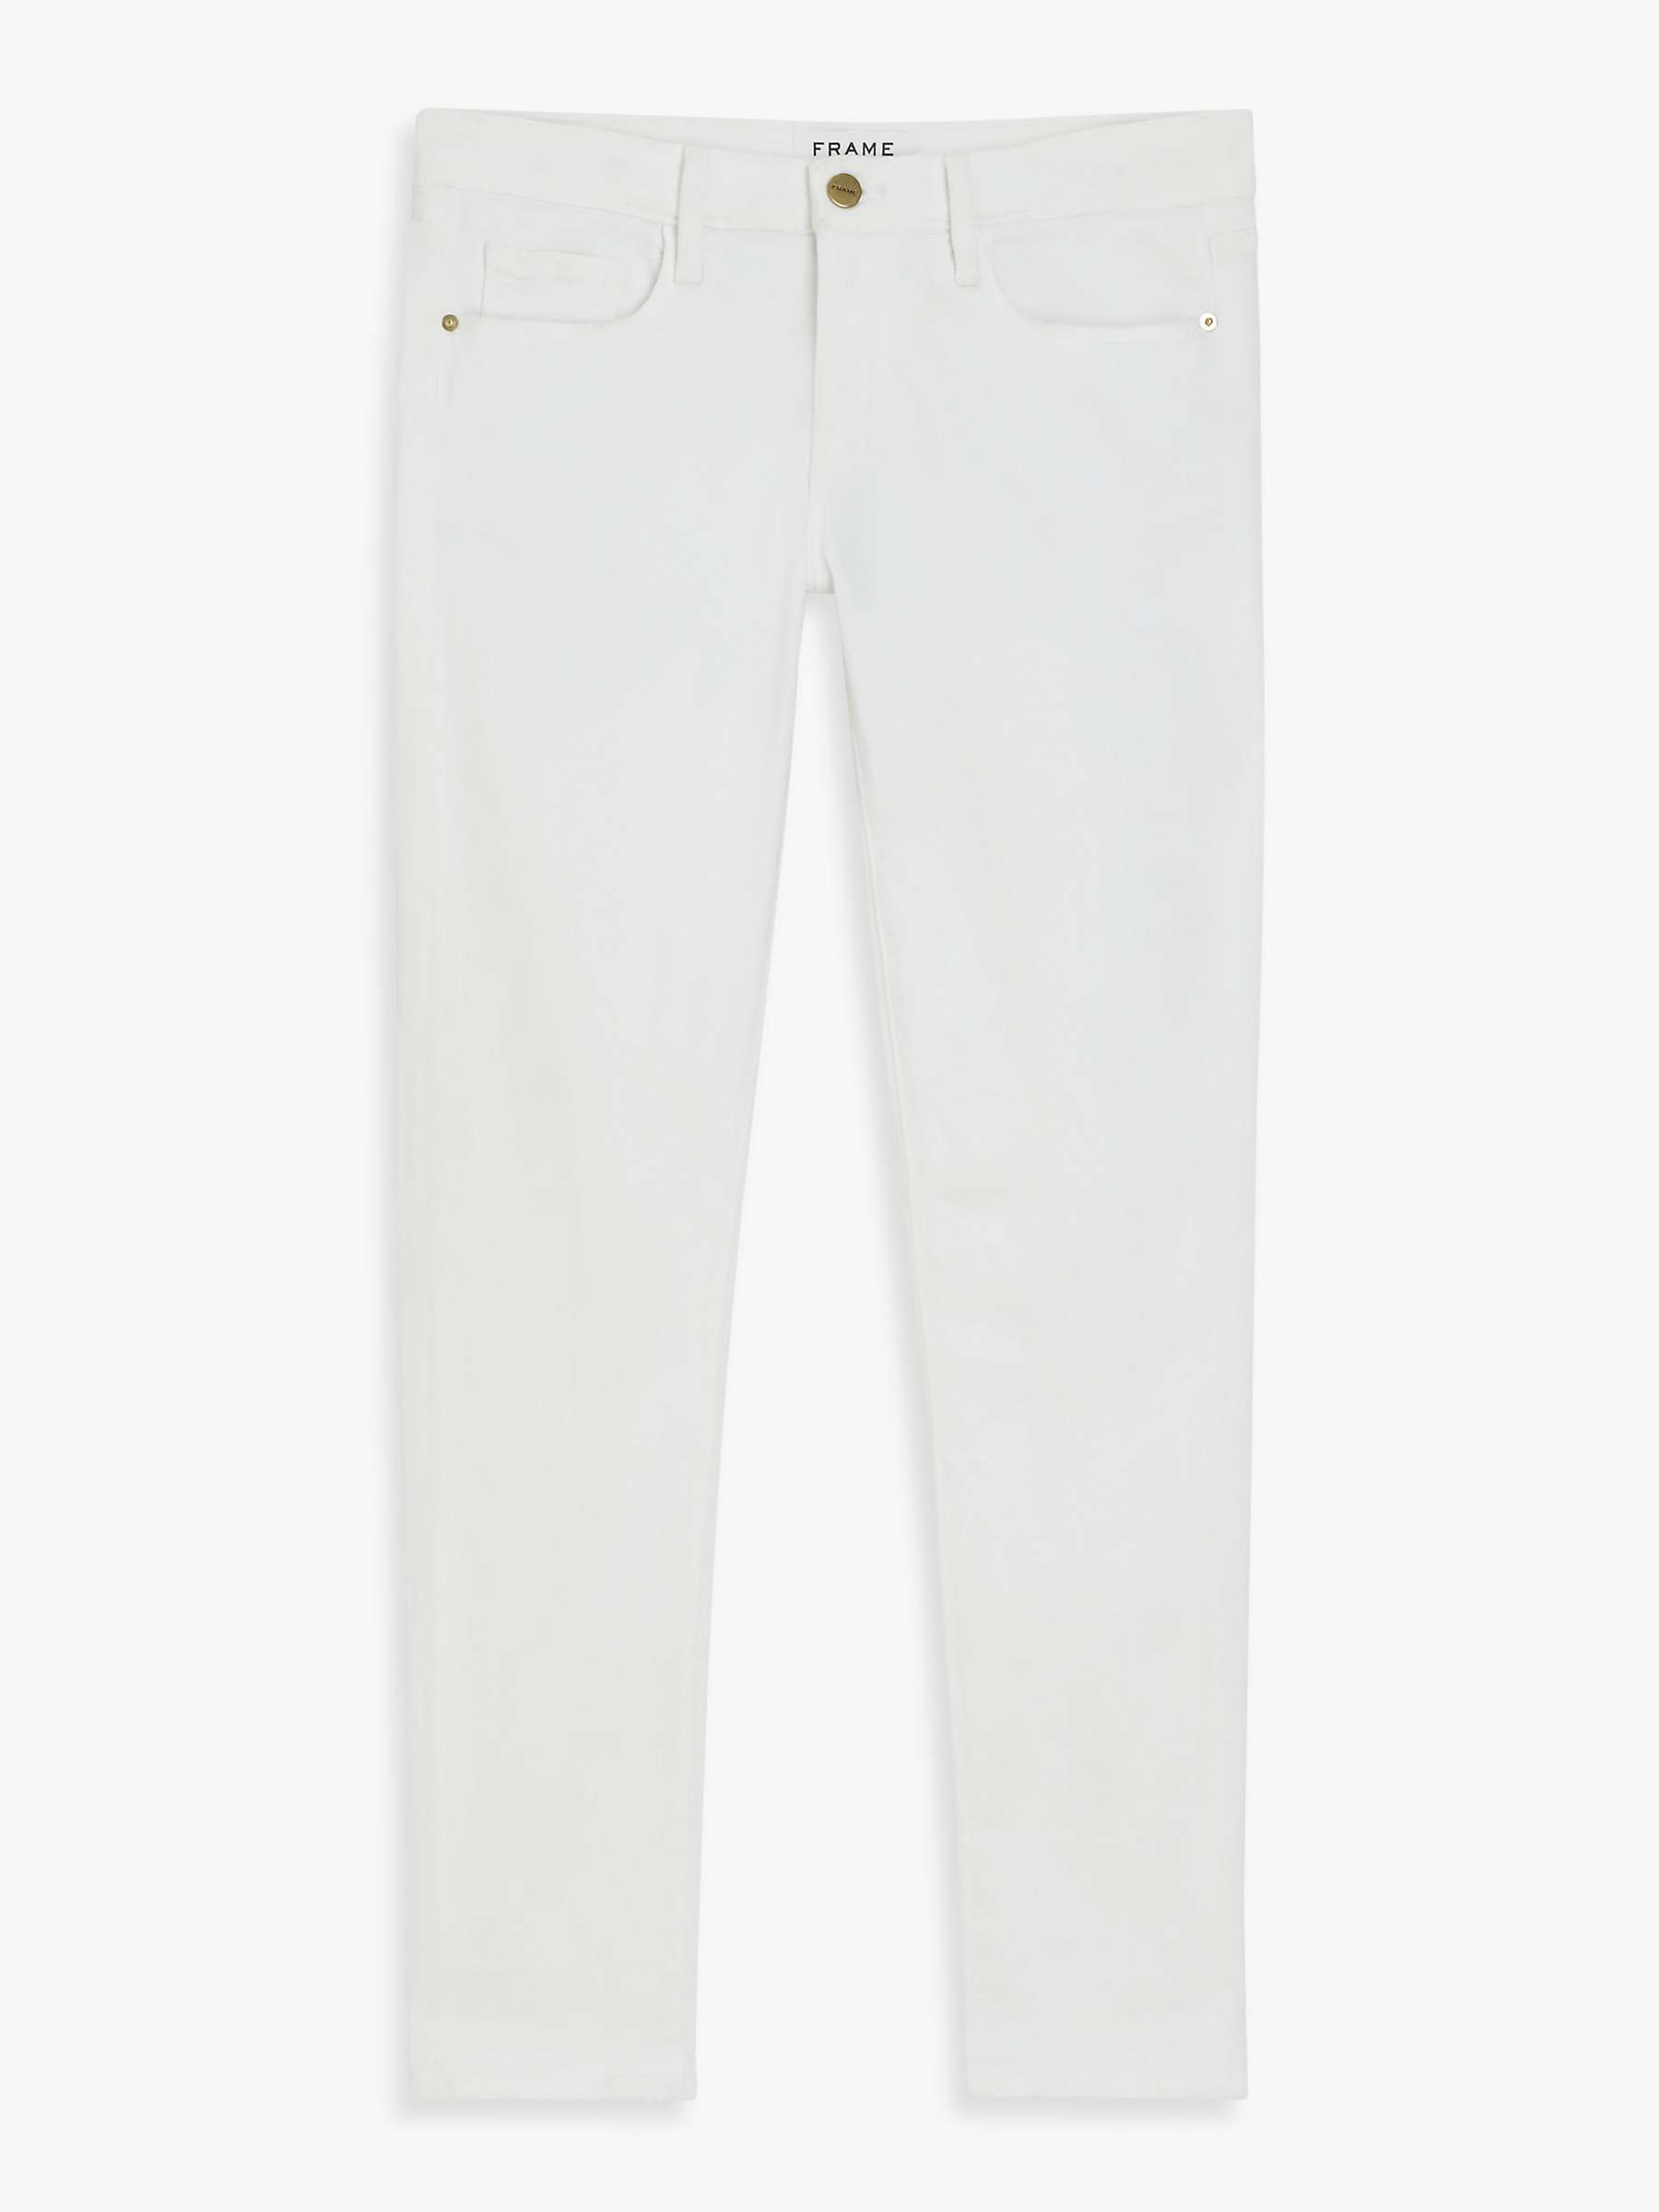 FRAME Le Garcon Boyfriend Jeans, White at John Lewis & Partners